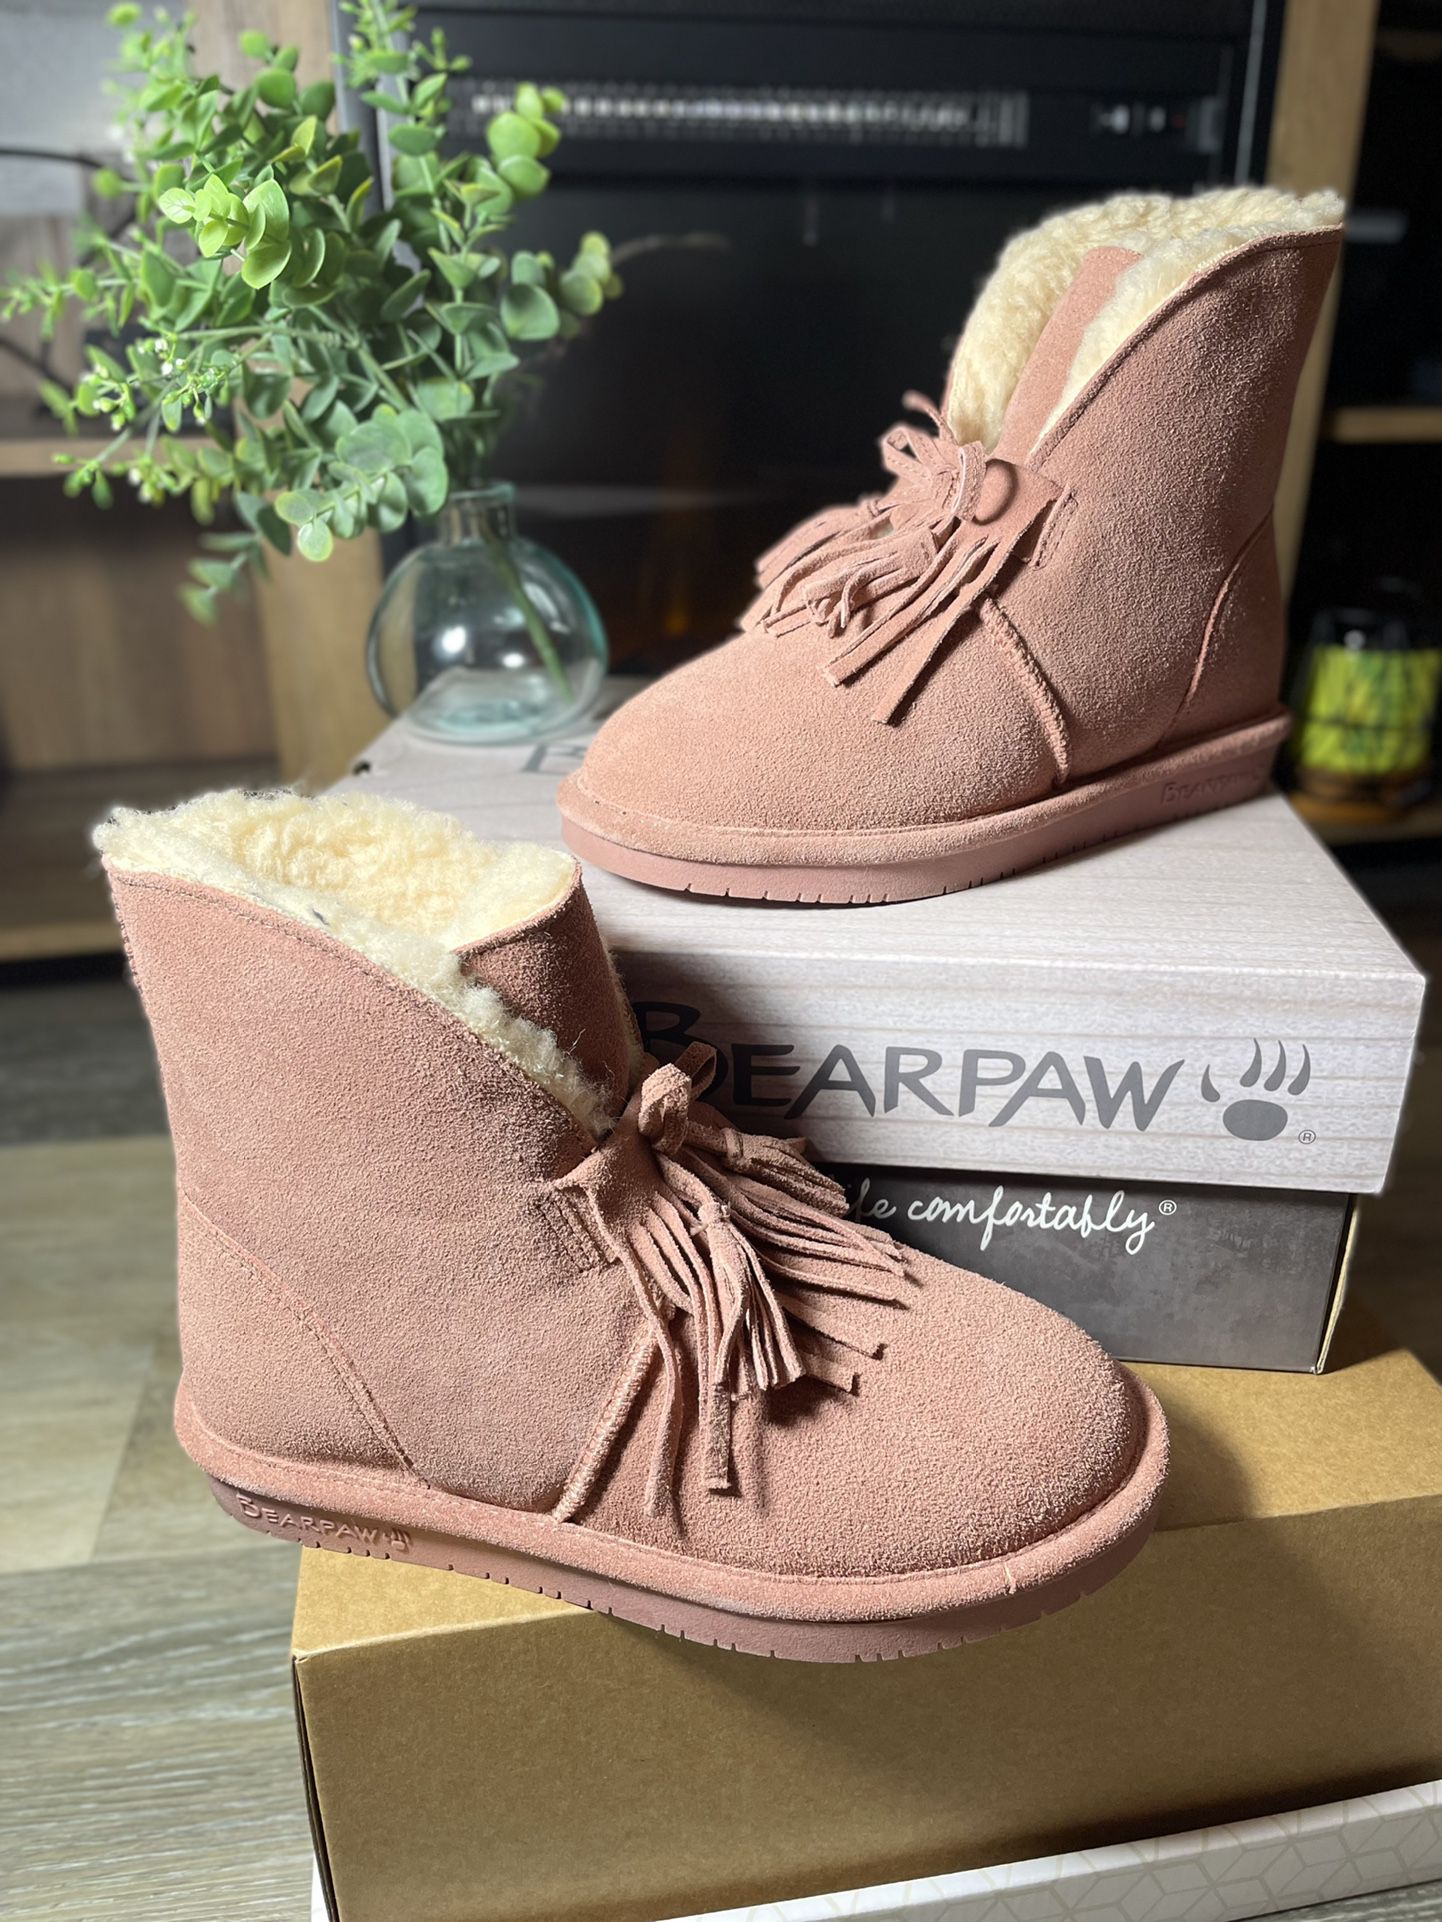 Bearpaw Christie Boot Size 5